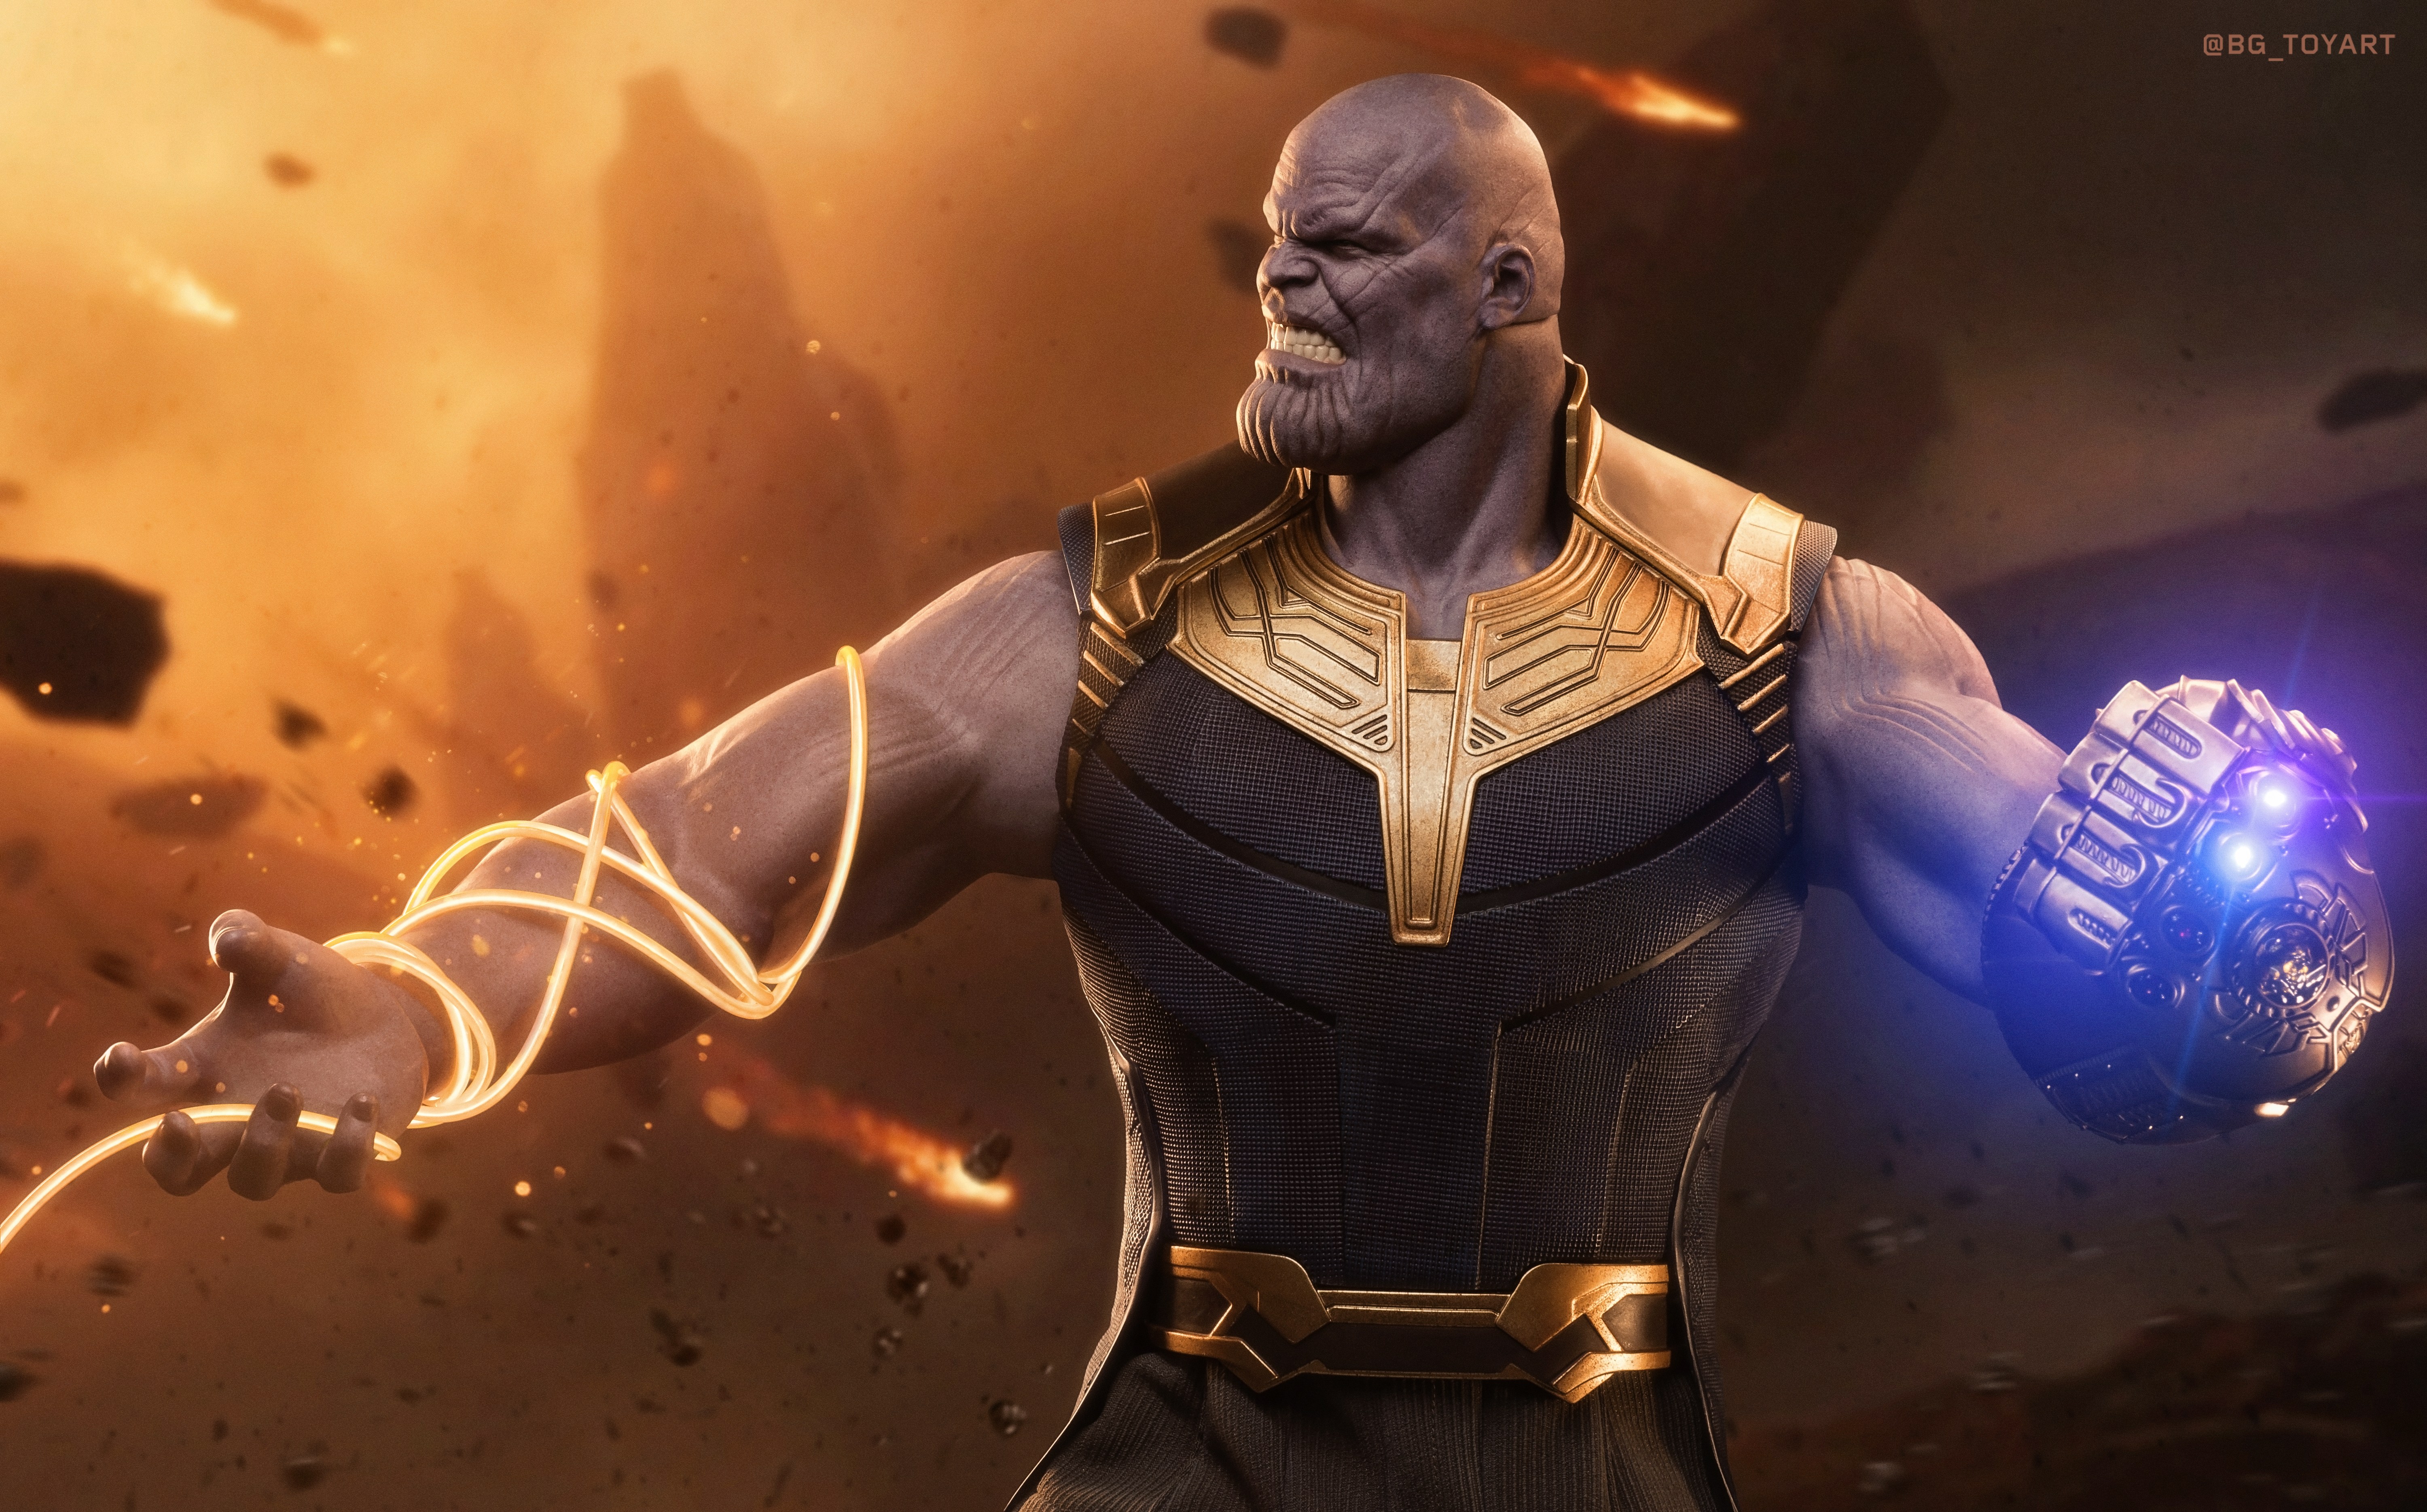 Avengers: Infinity War 4k Ultra HD Wallpaper by Alex Brooks